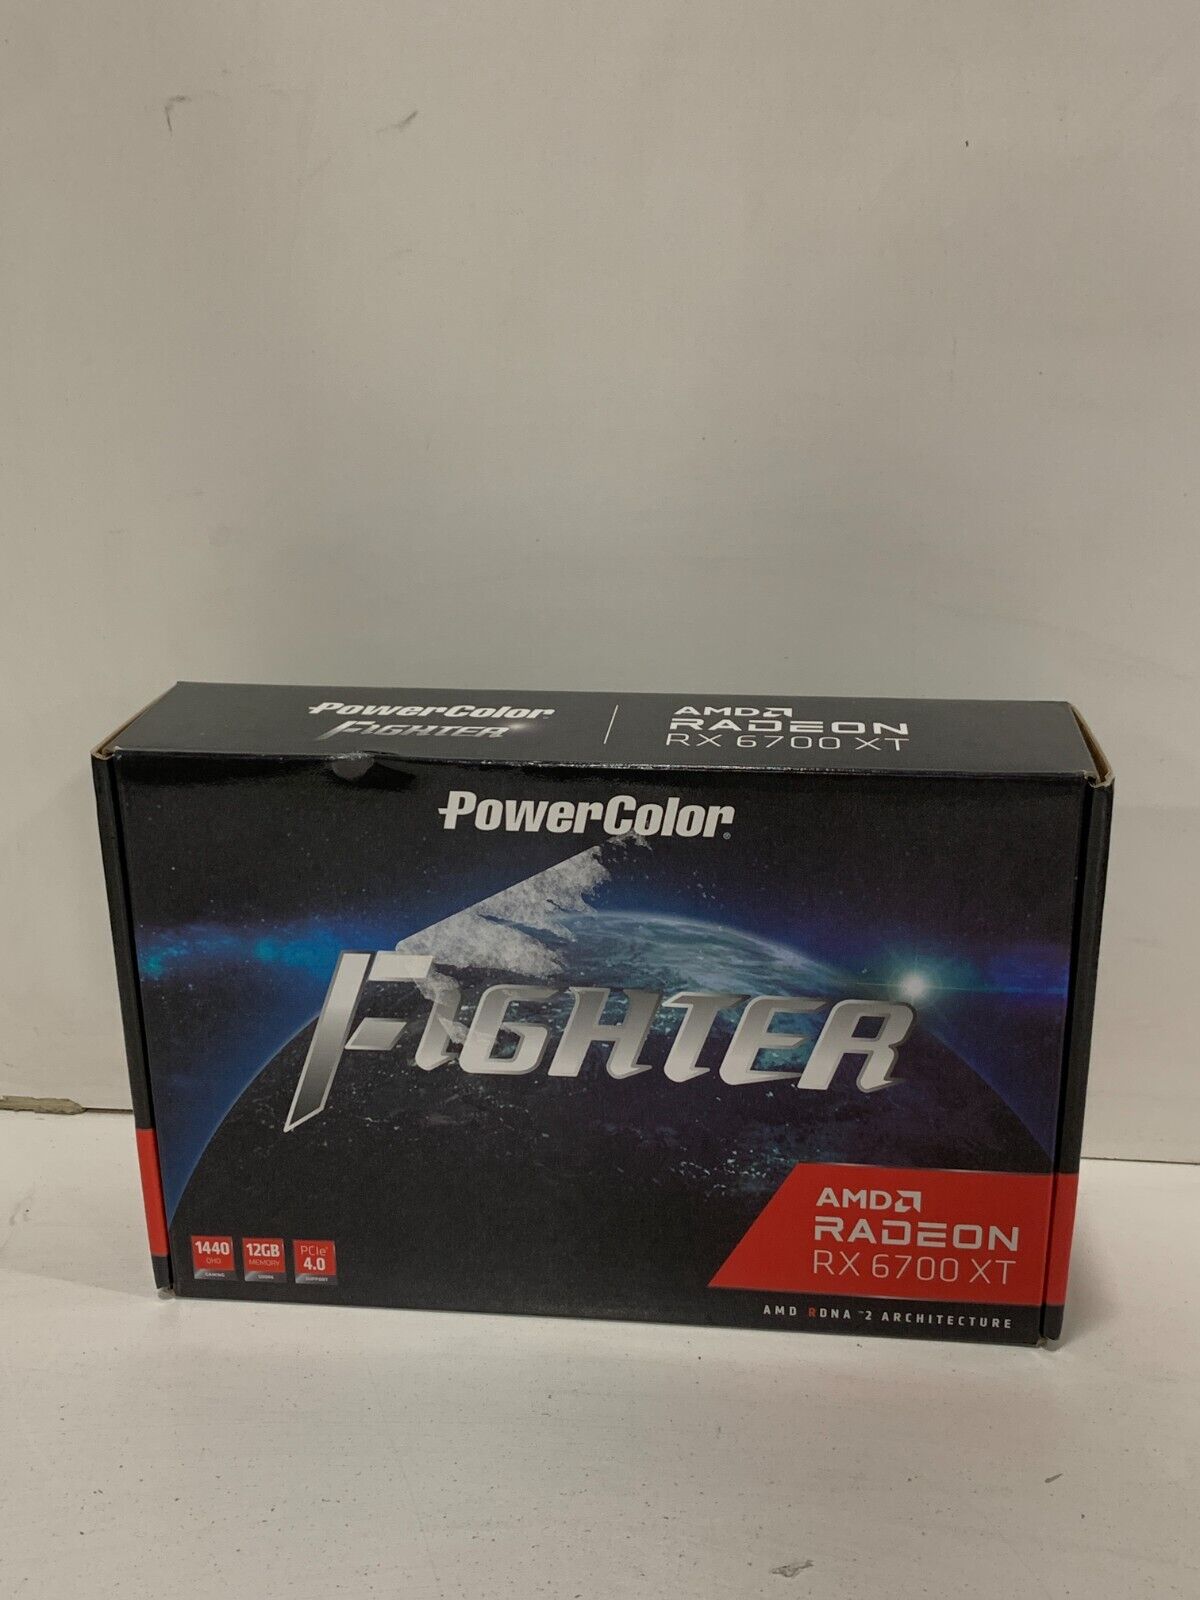 PowerColor Fighter AMD Radeon RX 6700 XT Video Graphics Card- 12GB GDDR6